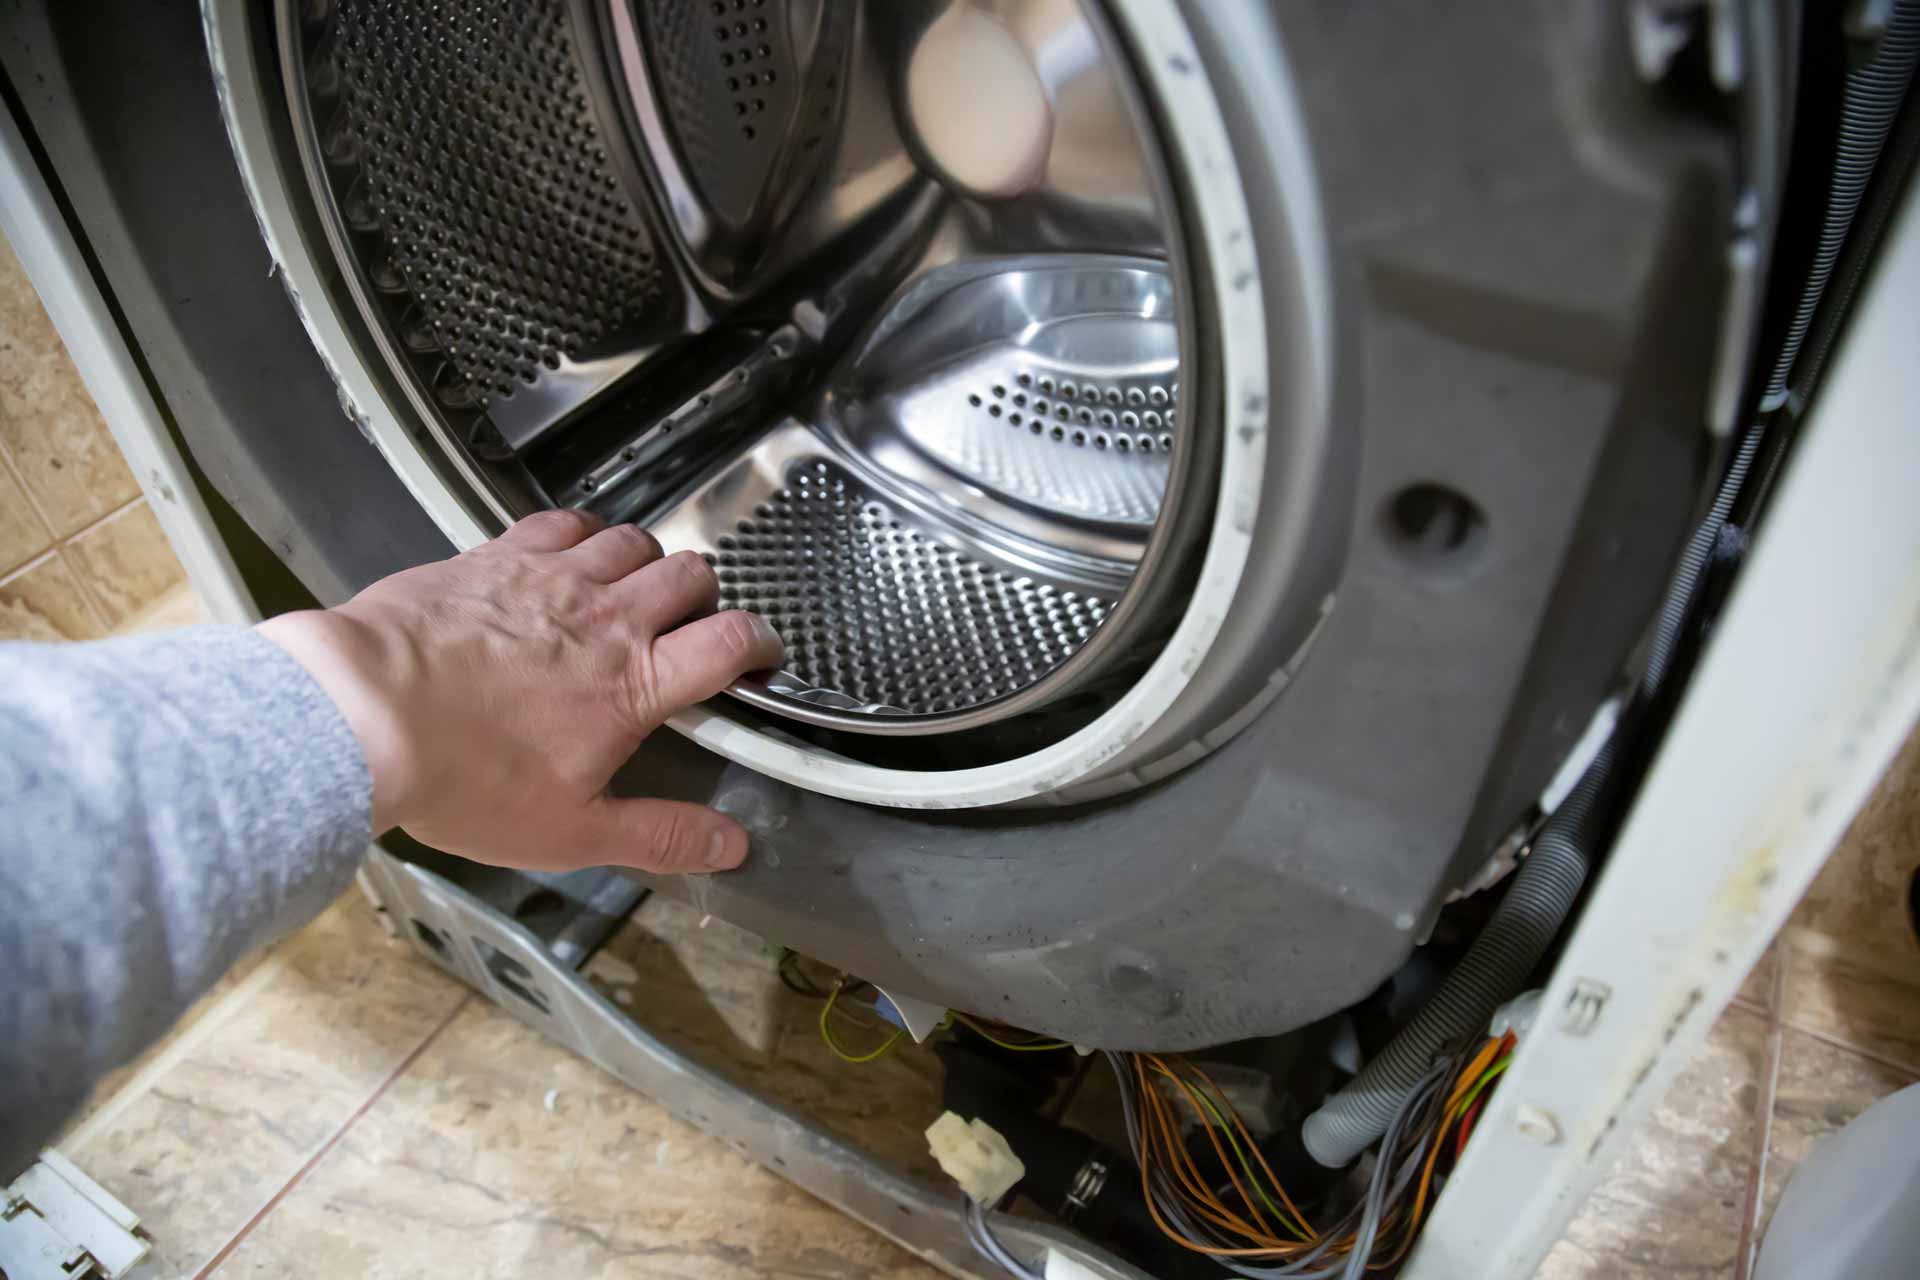 Appliance repair technician repairing a clothes dryer